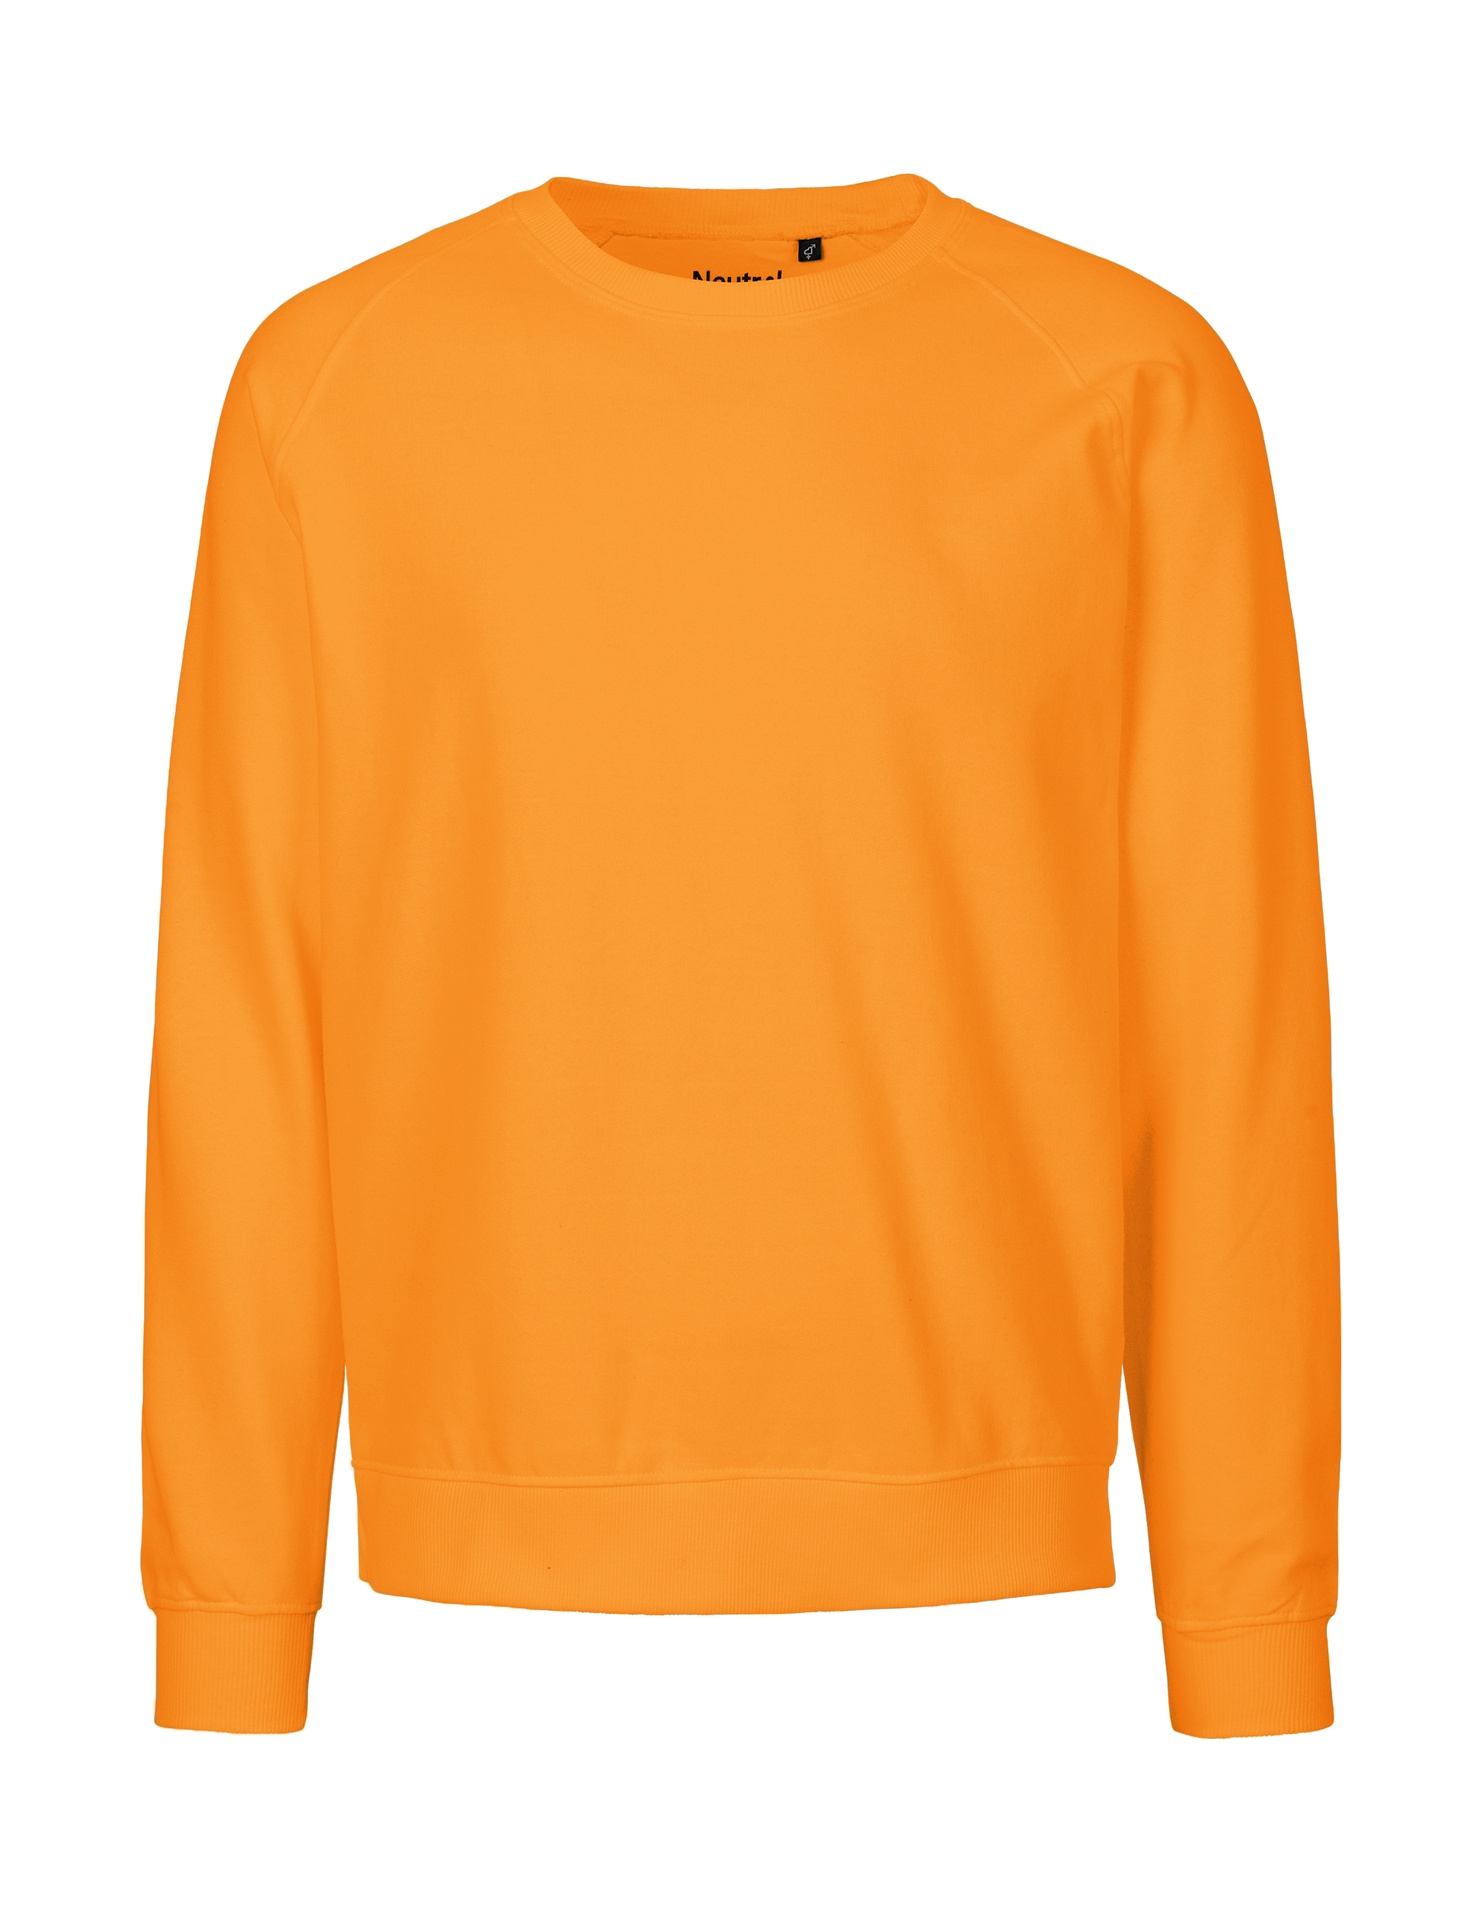 [PR/02794] Unisex Sweatshirt (Okay Orange 31, 4XL)